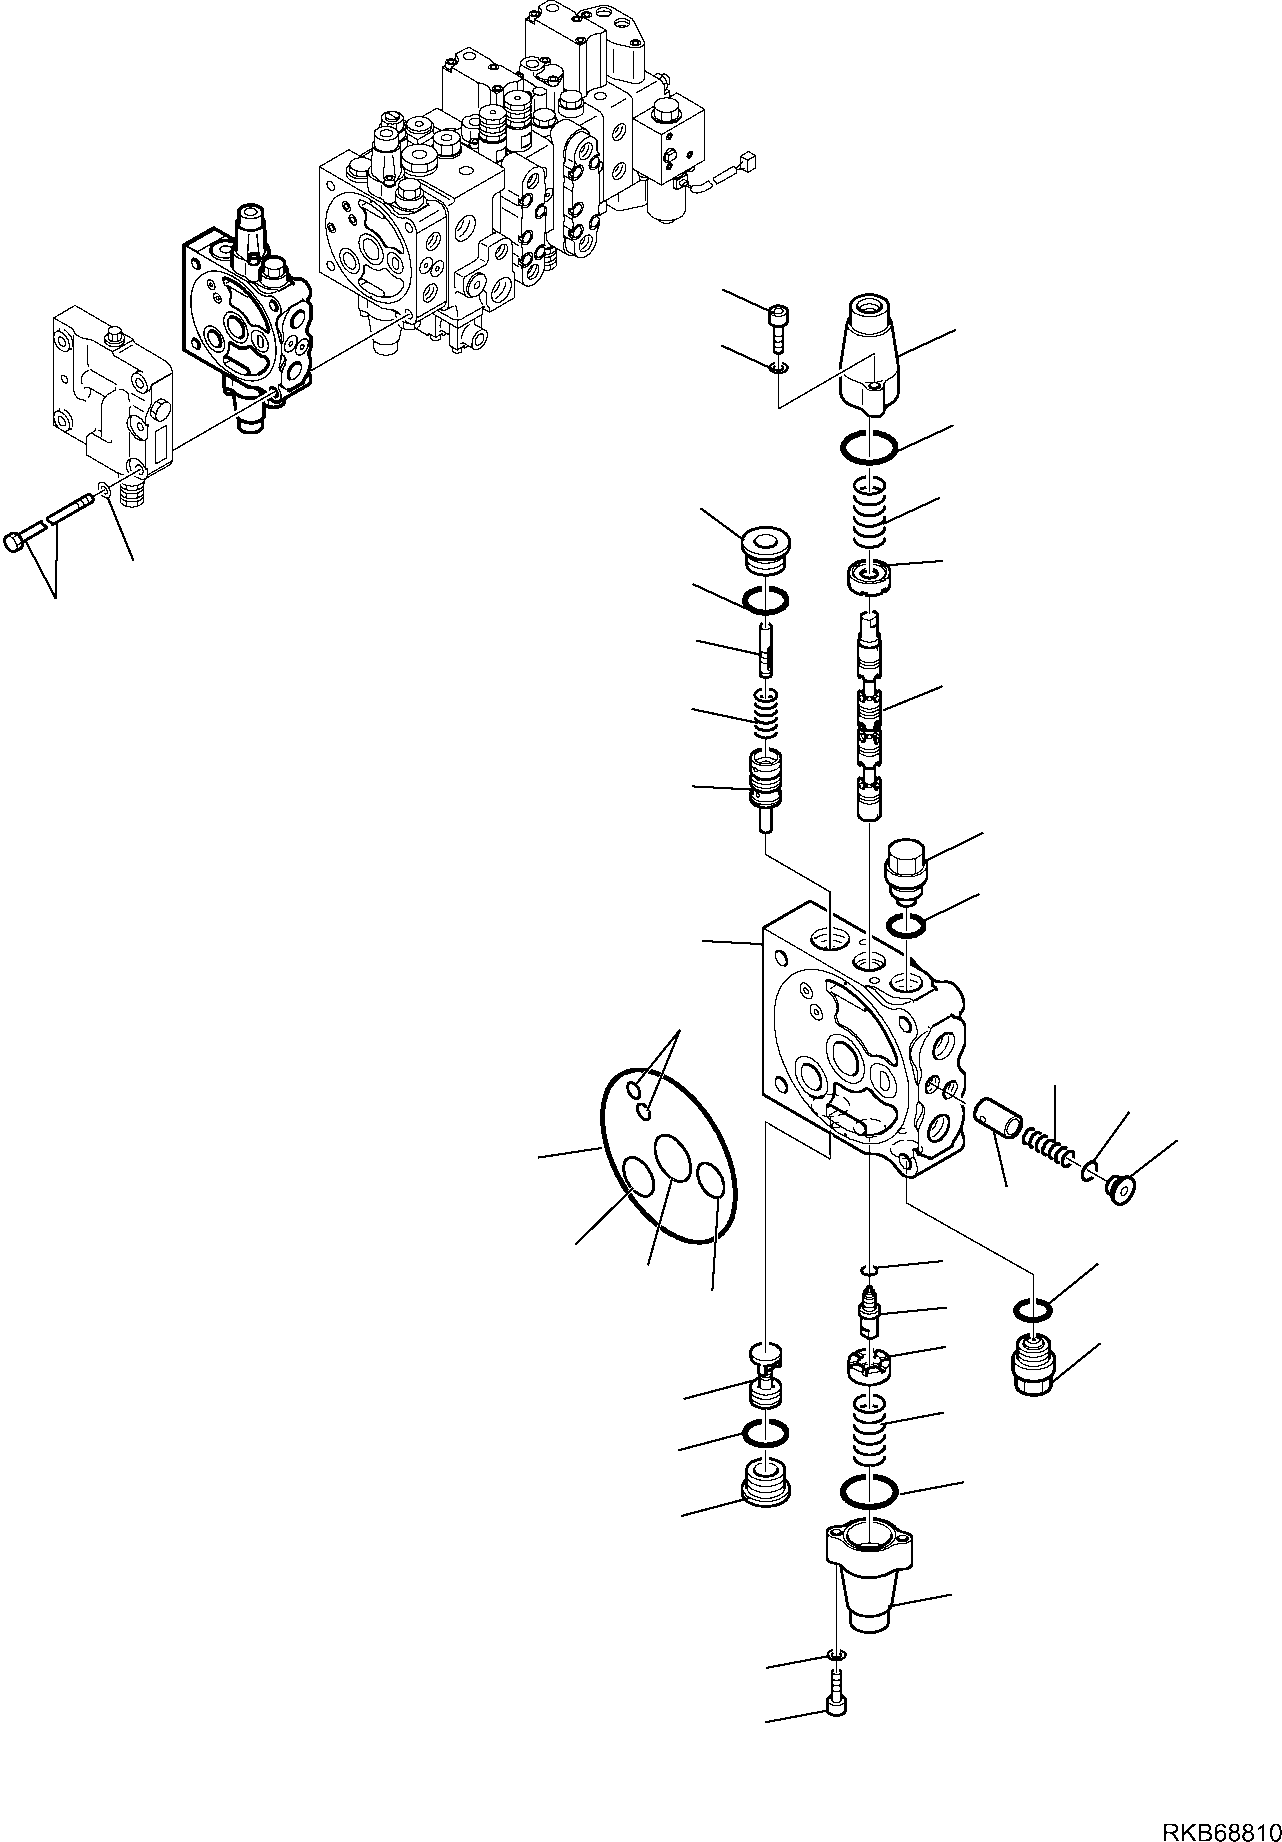 40. SIDE DIGGING BOOM ELEMENT [6298] - Komatsu part WB97S-5E0 S/N F30451- UP [wb97s5e1]